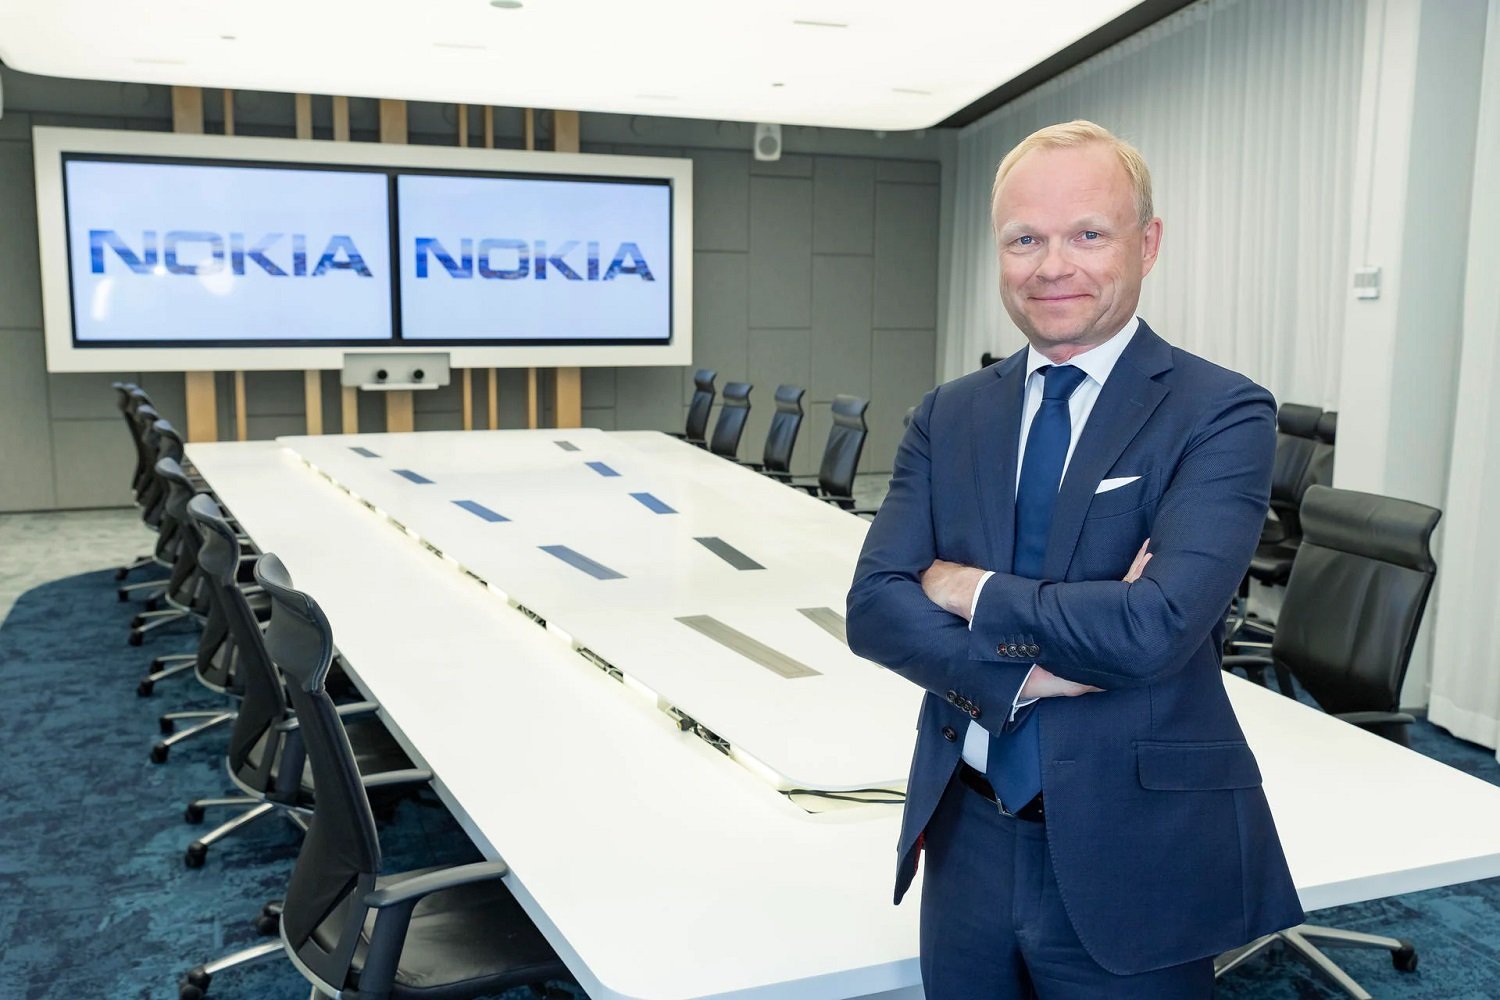 Nokia cites ‘strong start’ to 2022 despite supply chain constraints